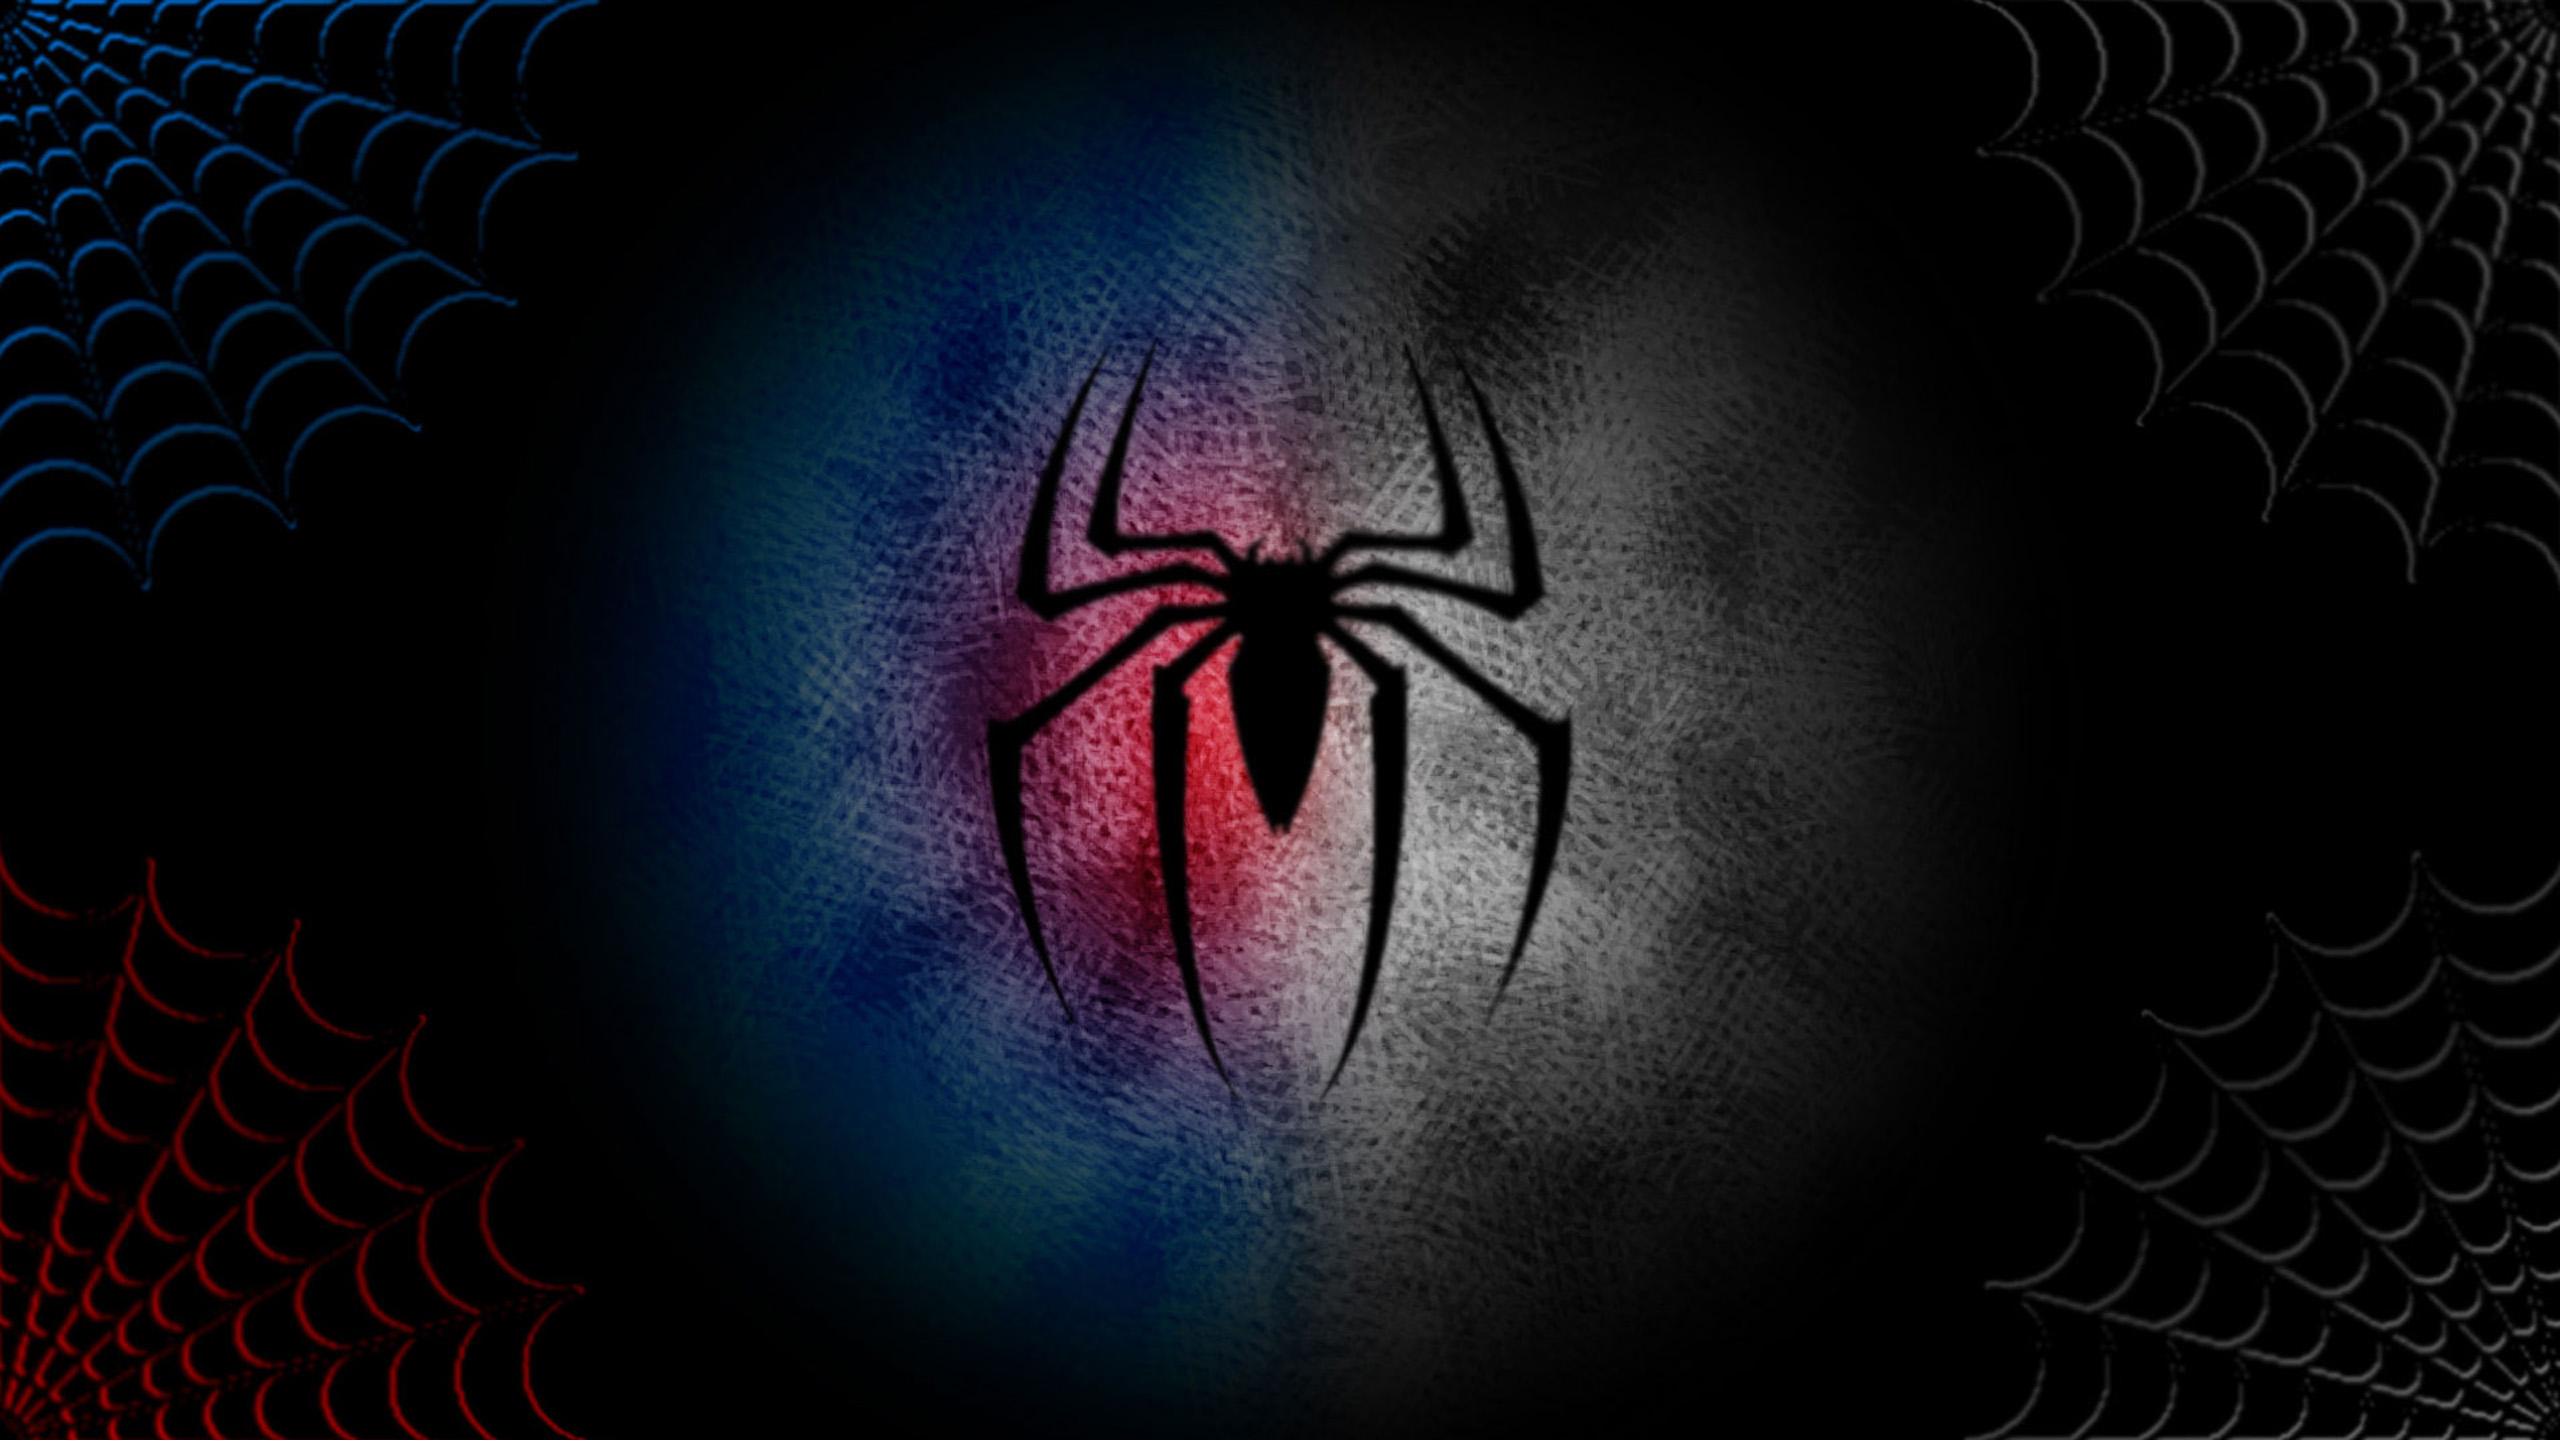 Spiderman logo wallpaper, HD Desktop Backgrounds